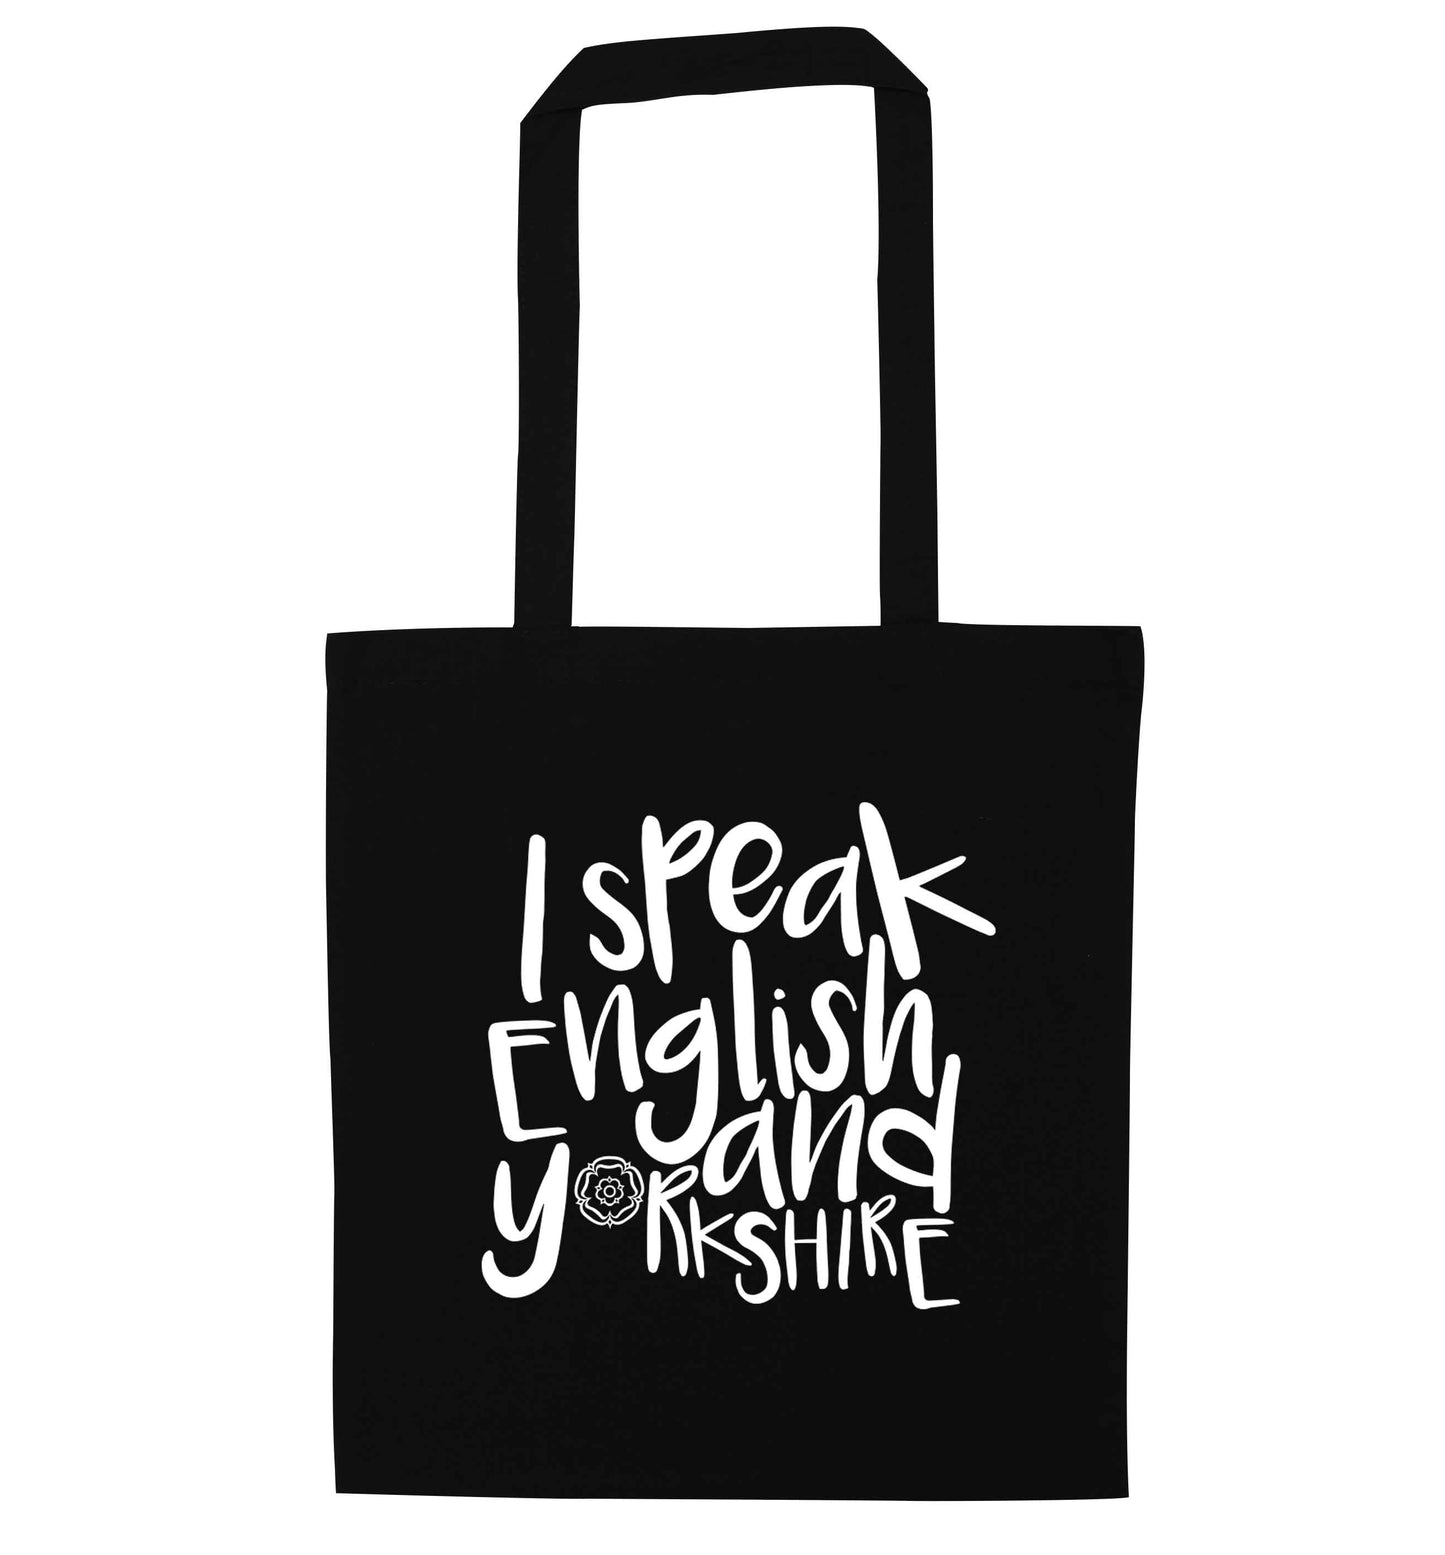 I speak English and Yorkshire black tote bag